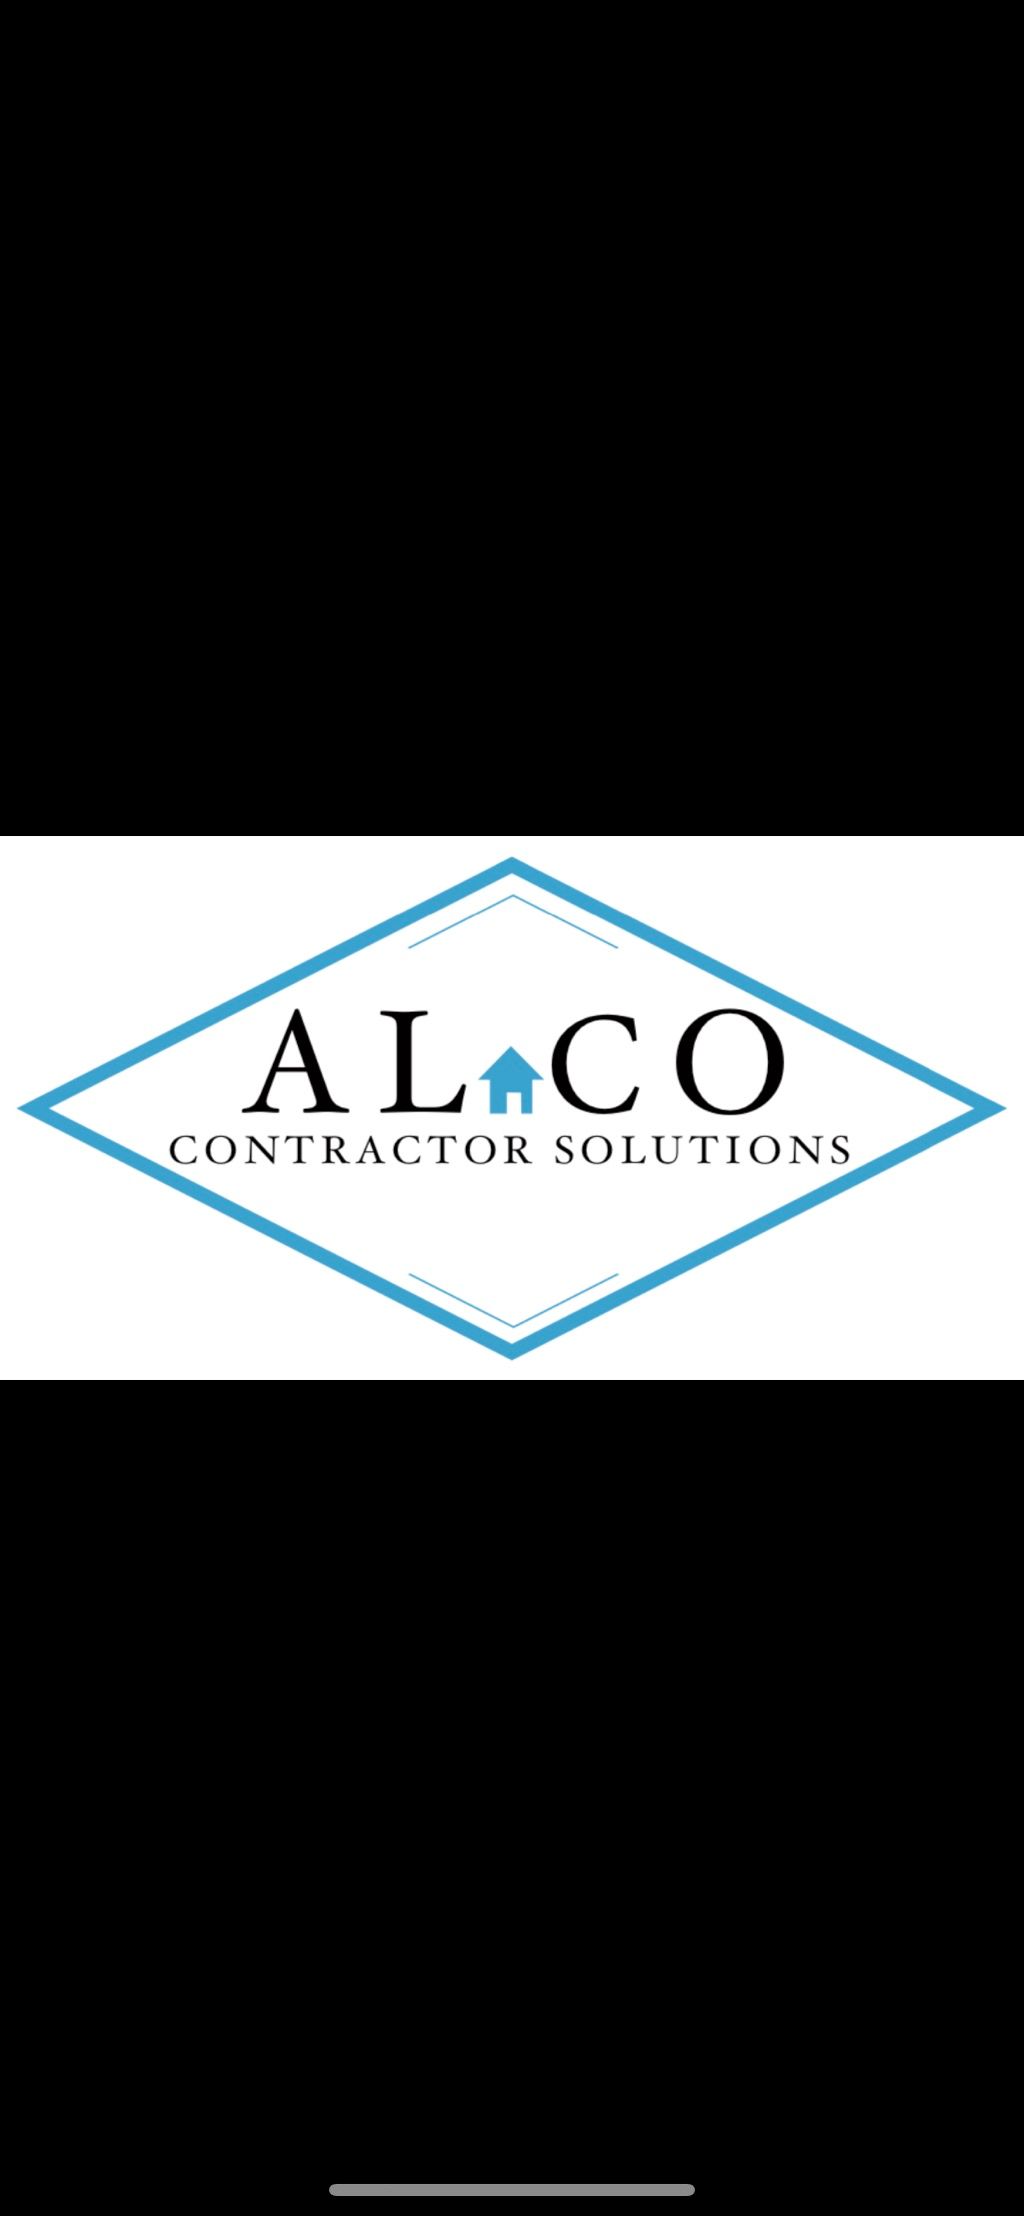 ALCO Contractor Solutions